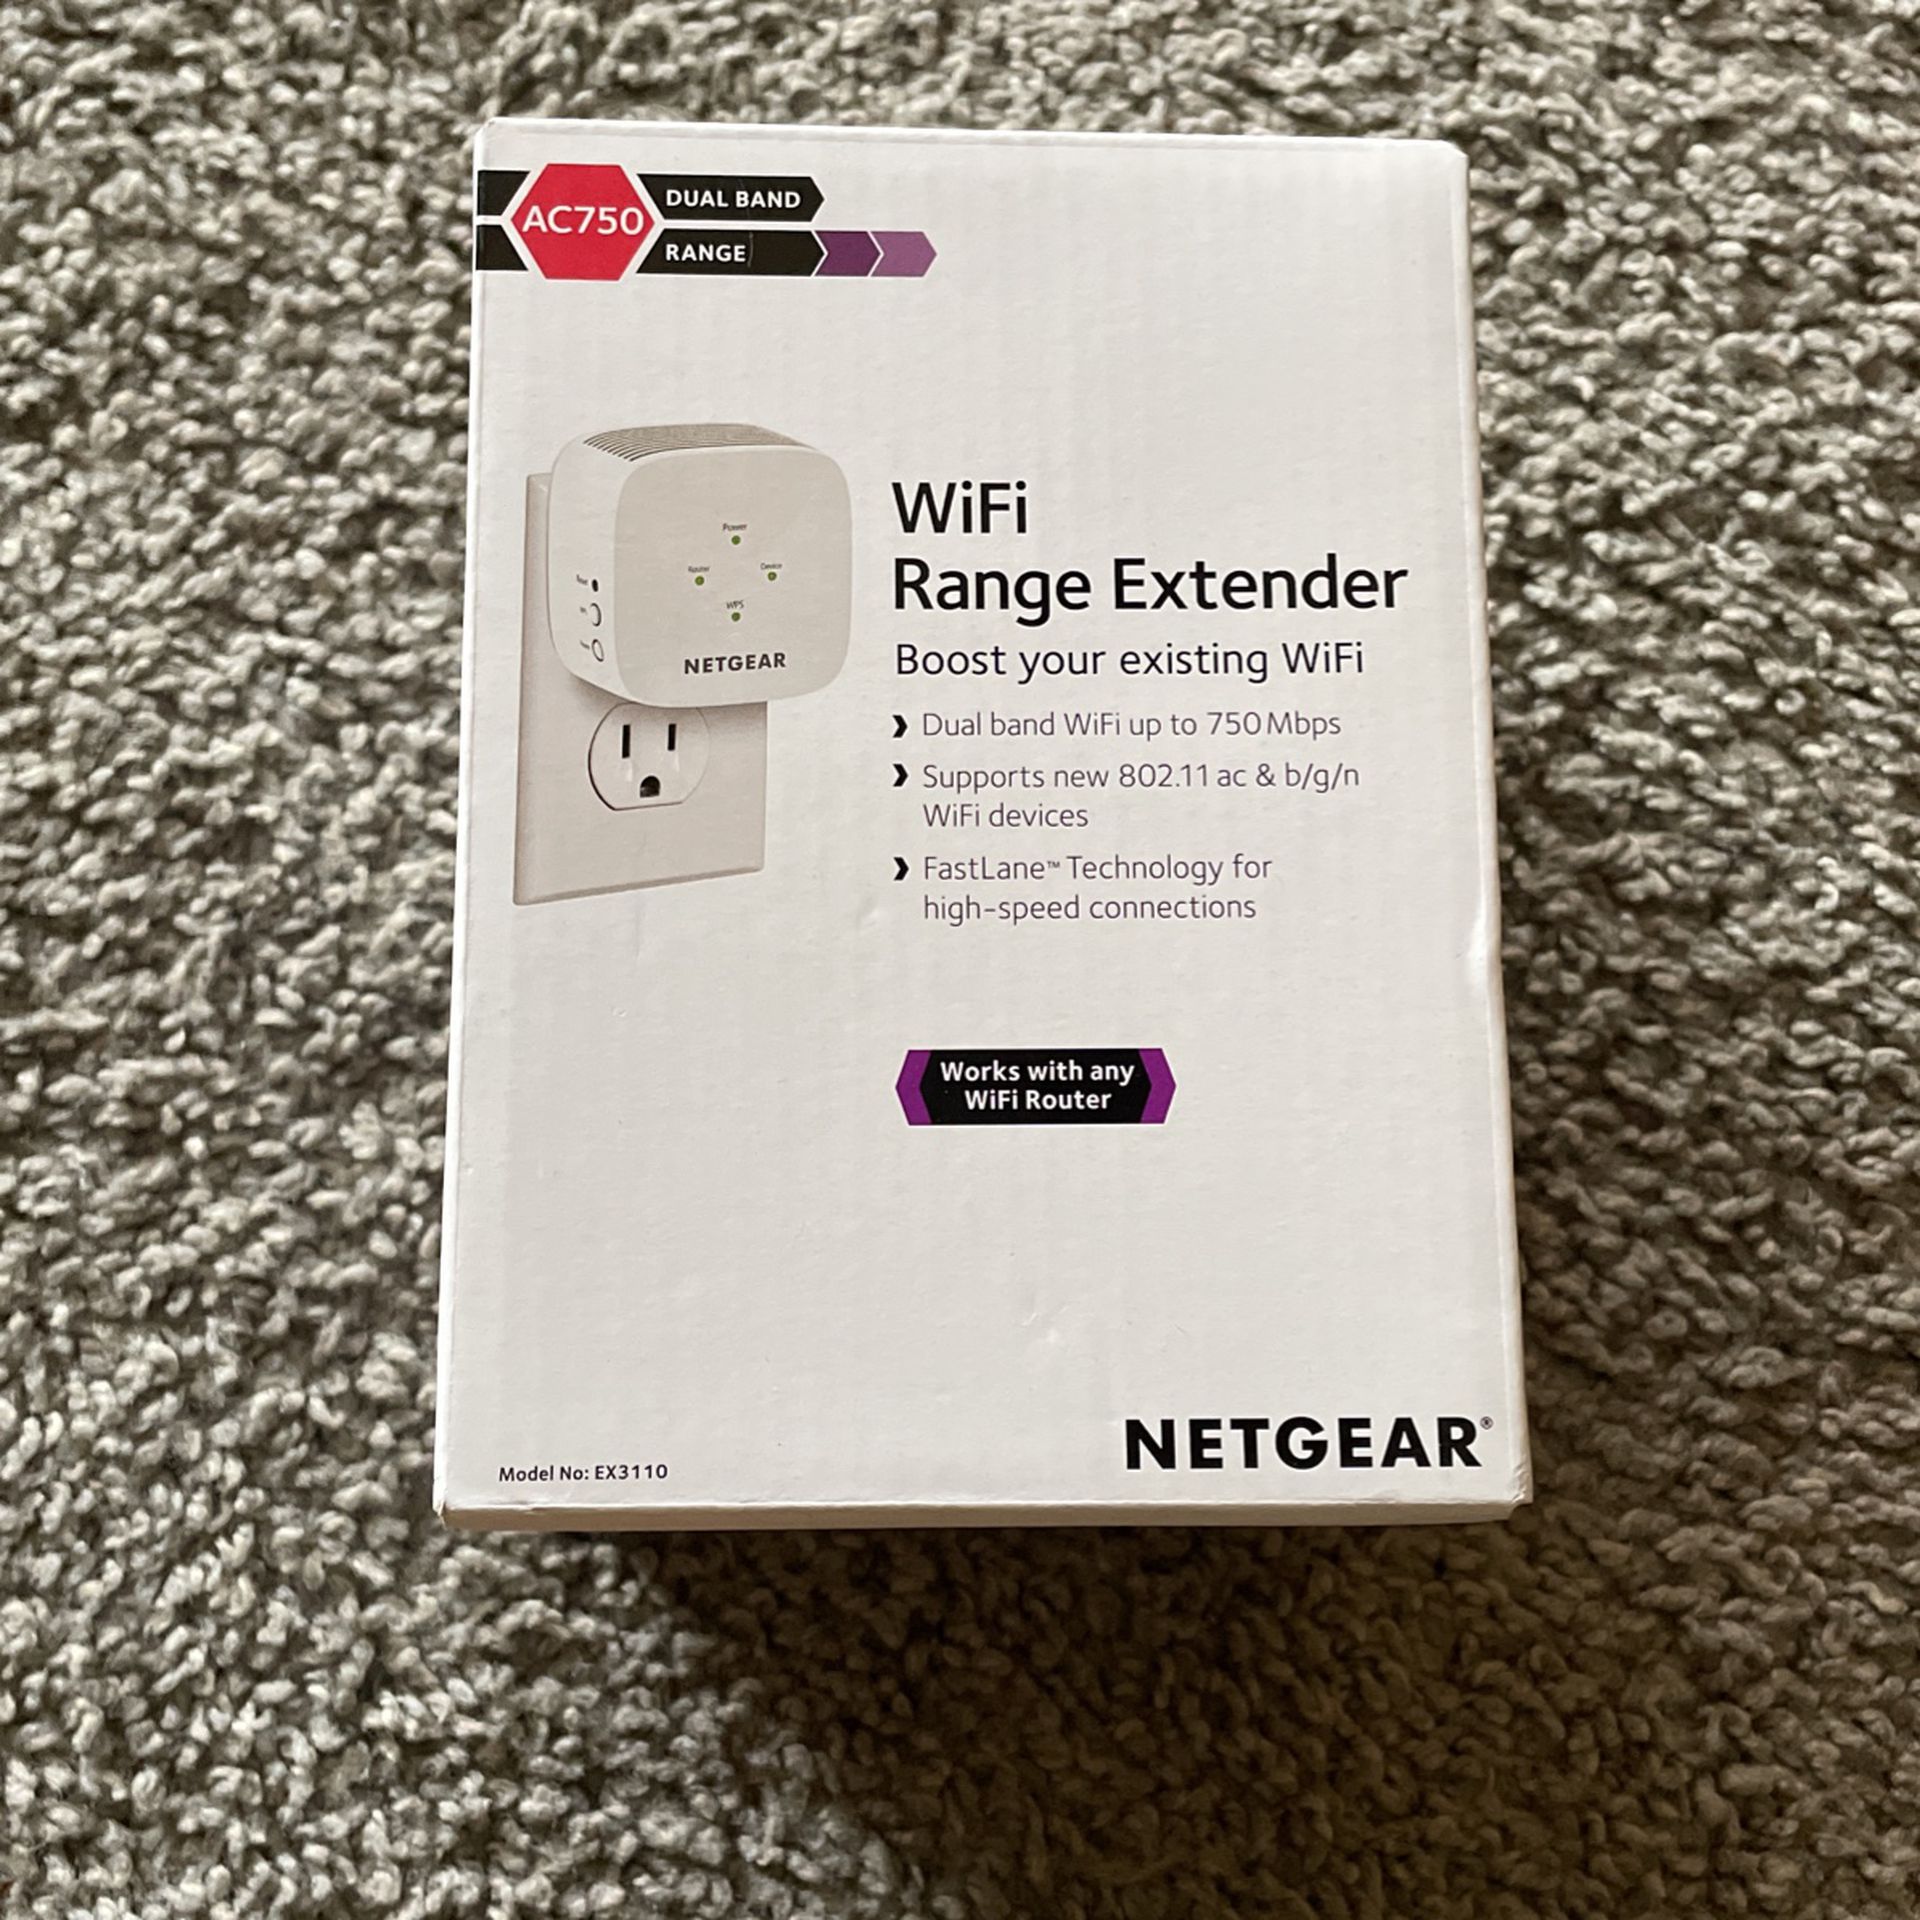 Wi-Fi range extender.